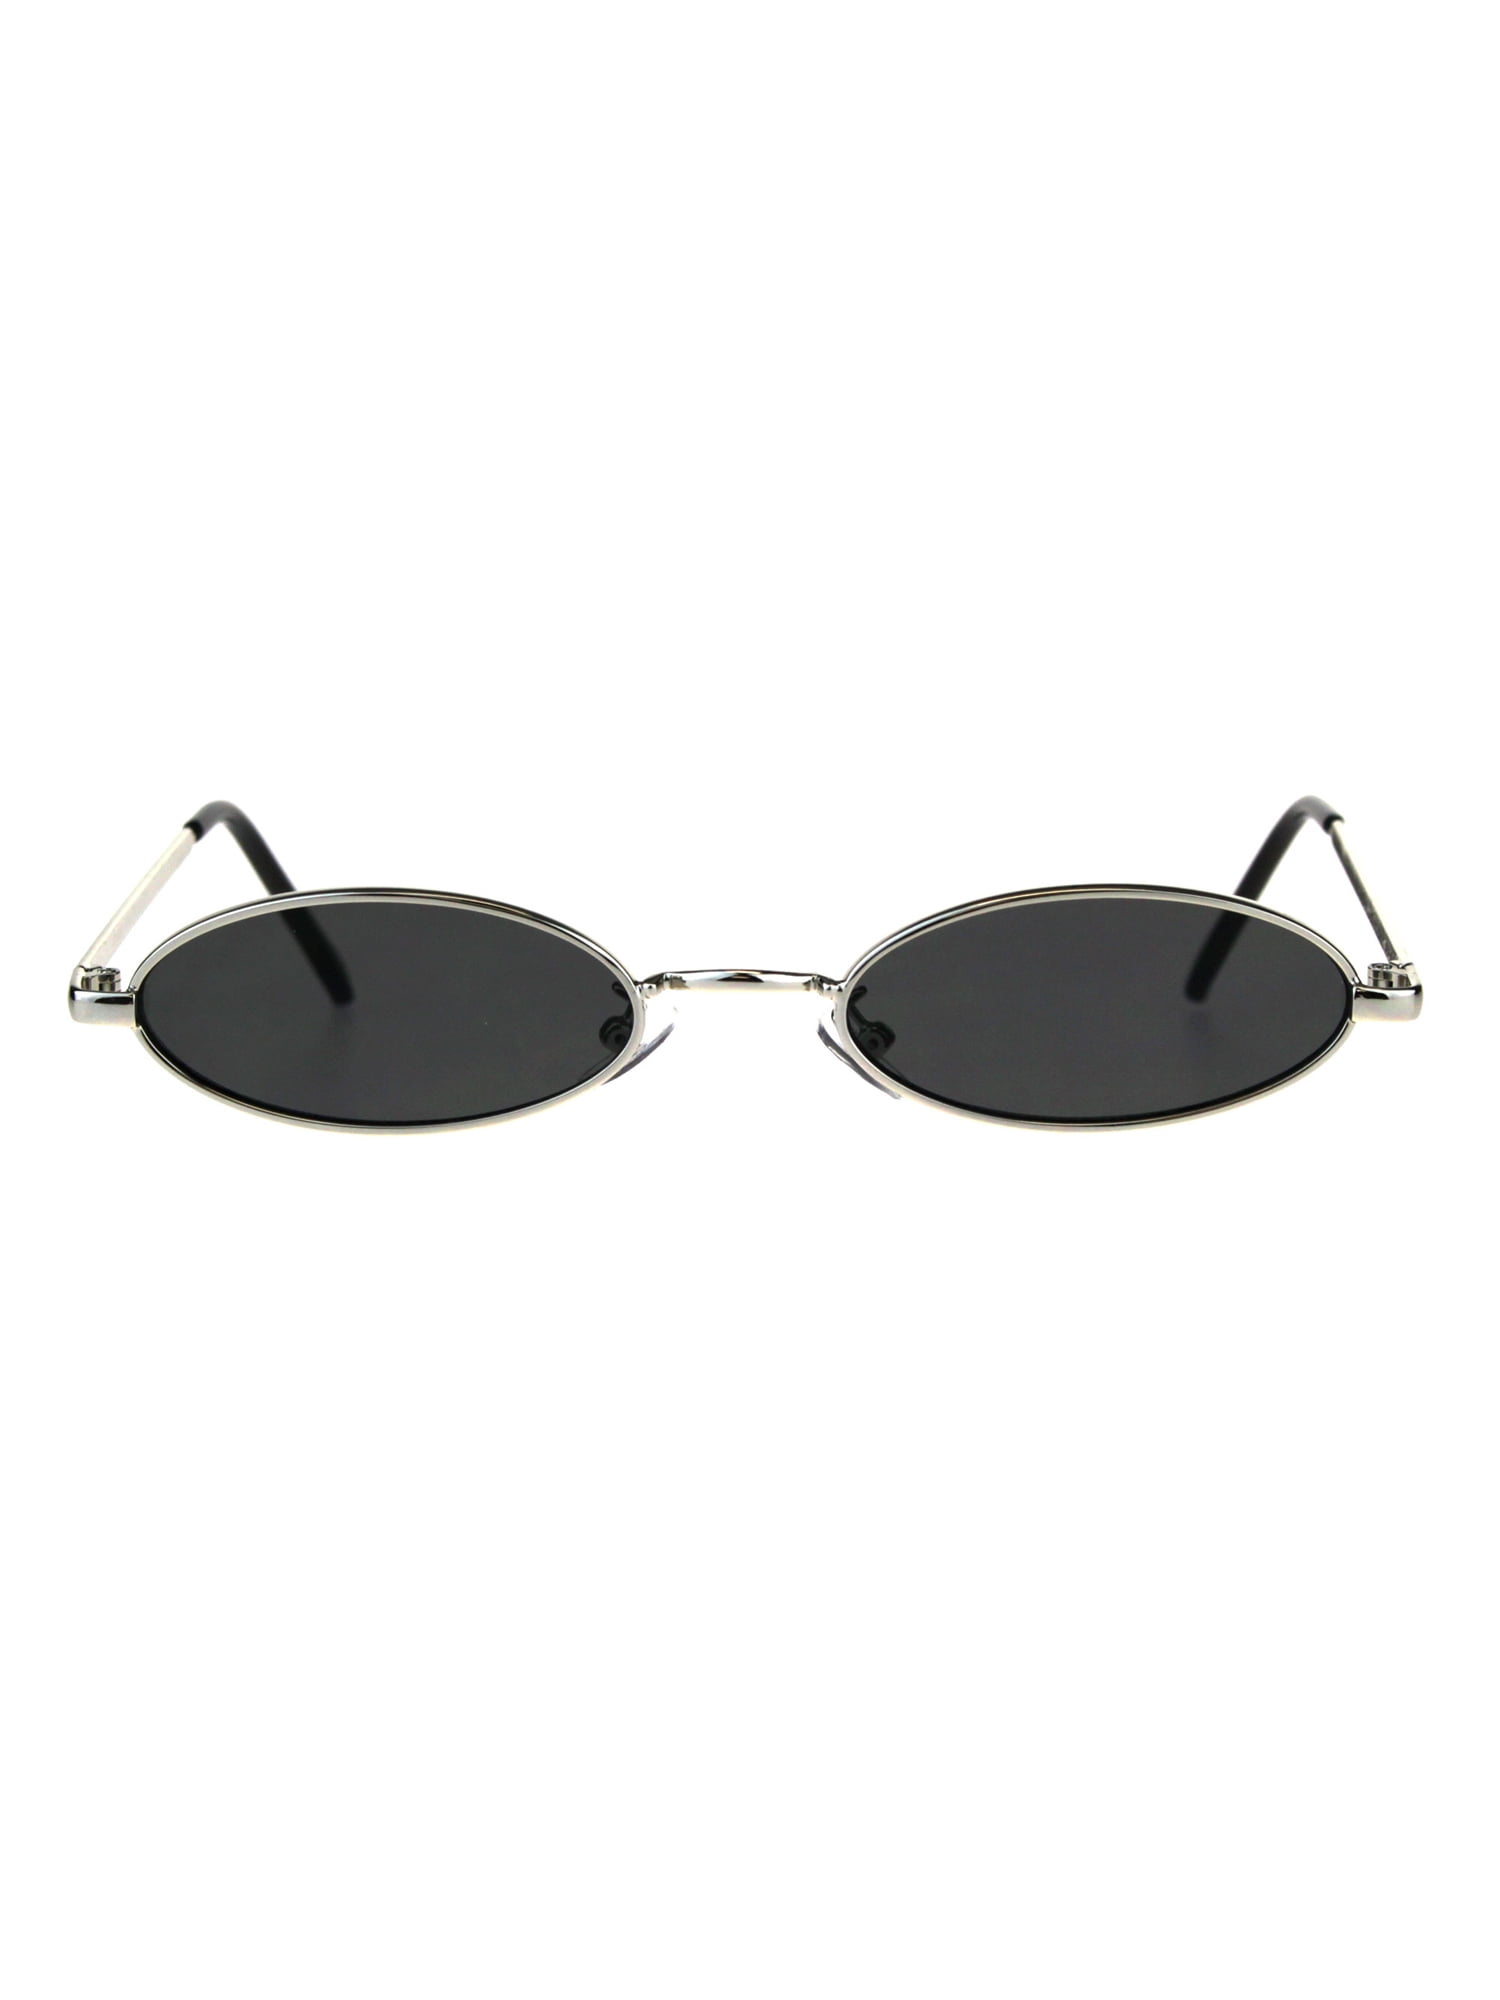 Mens Oval Narrow Metal Rim Round Mod Pimp Sunglasses Silver Black ...